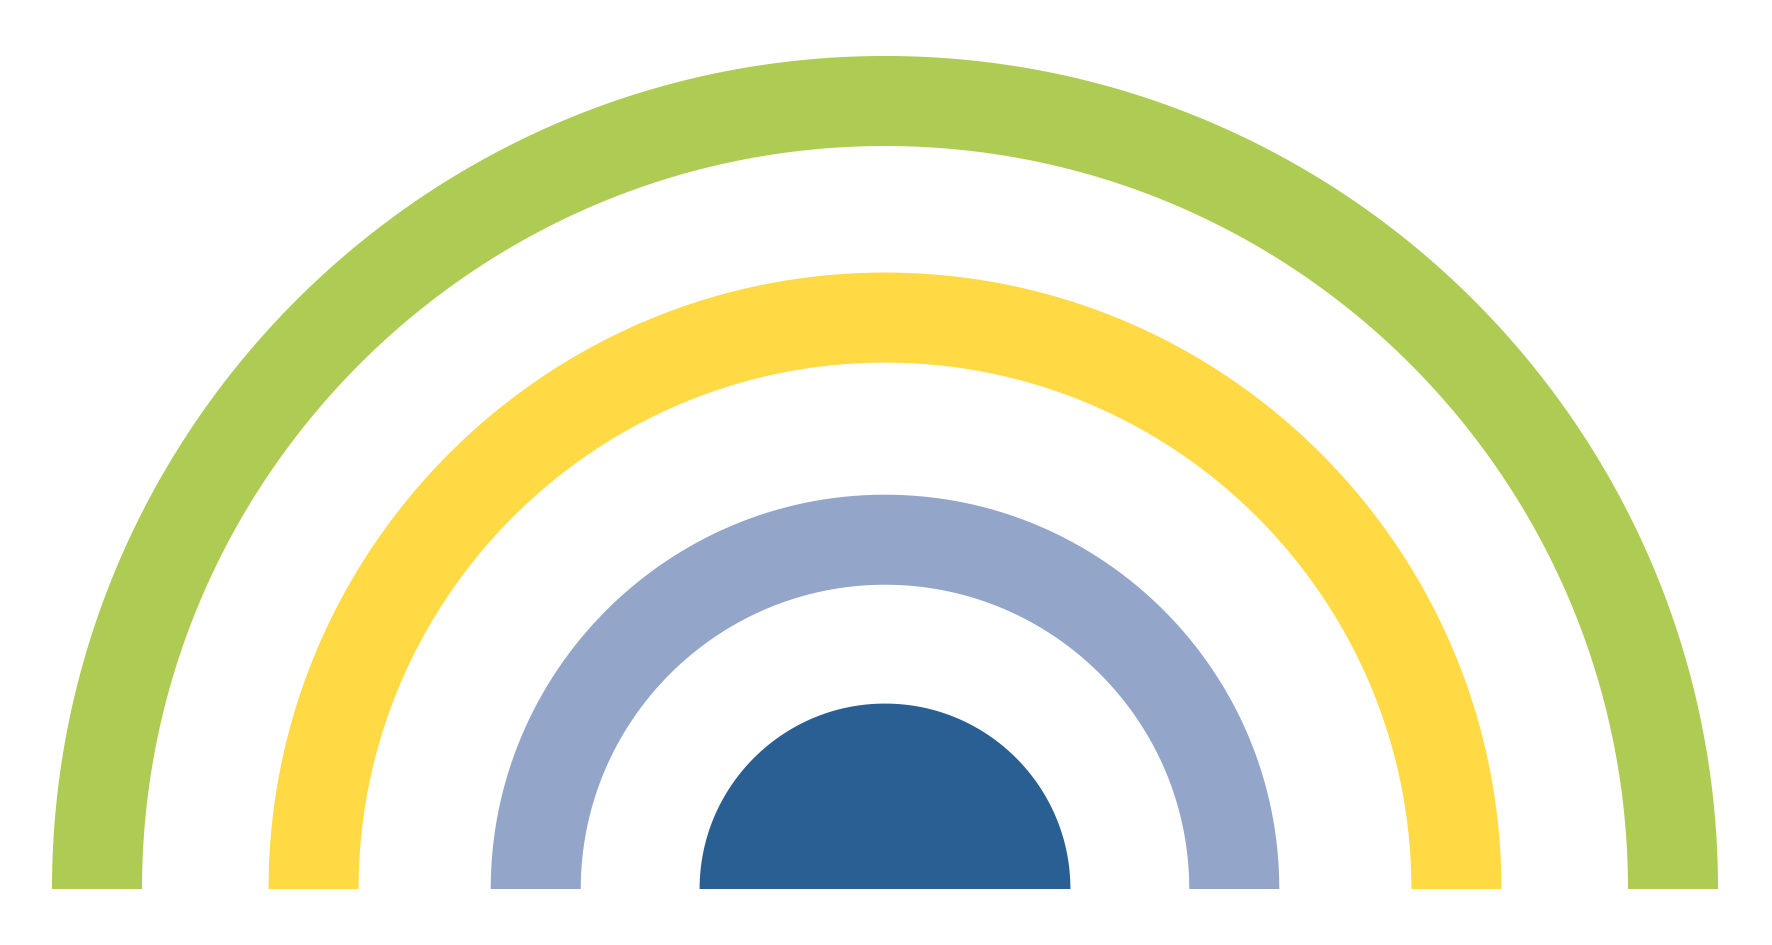 Logo Familiengerechte Hochschule